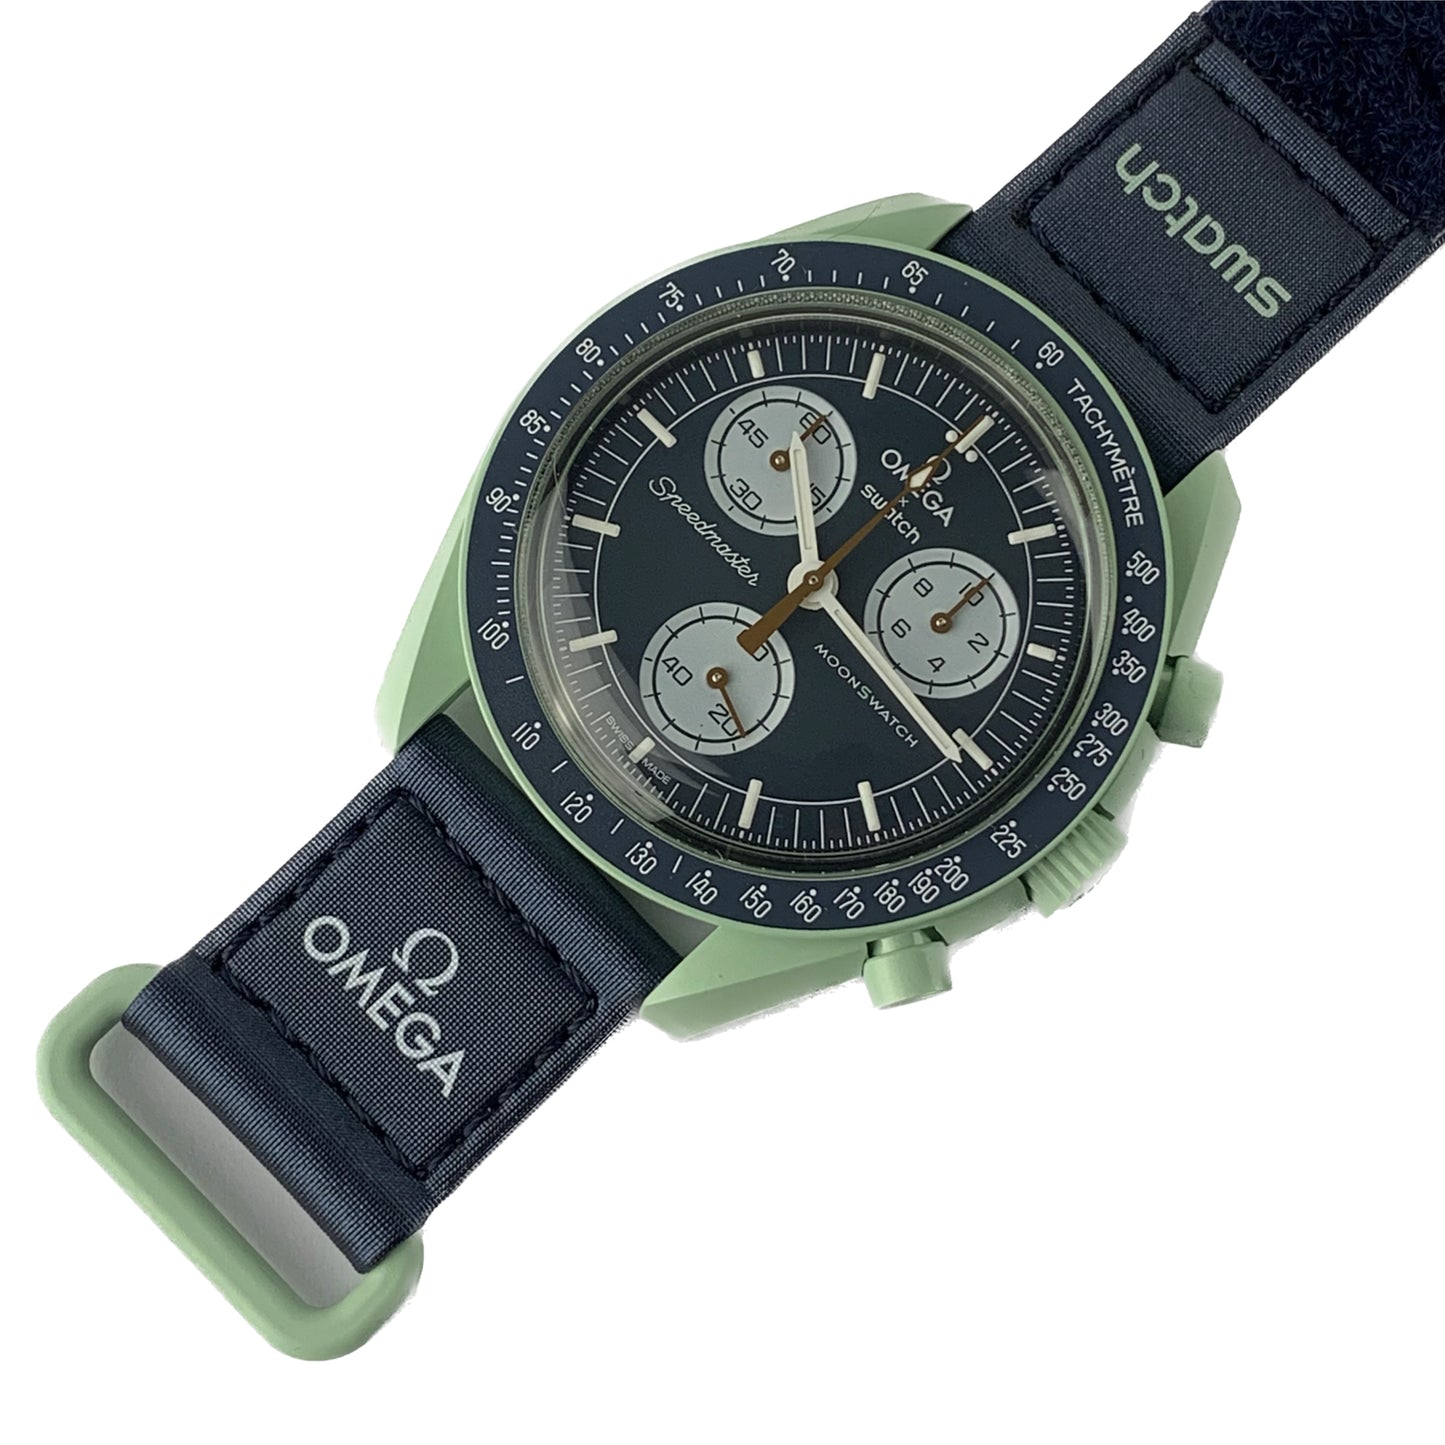 Originale Omega X Swatch Moonswatch Armbänder